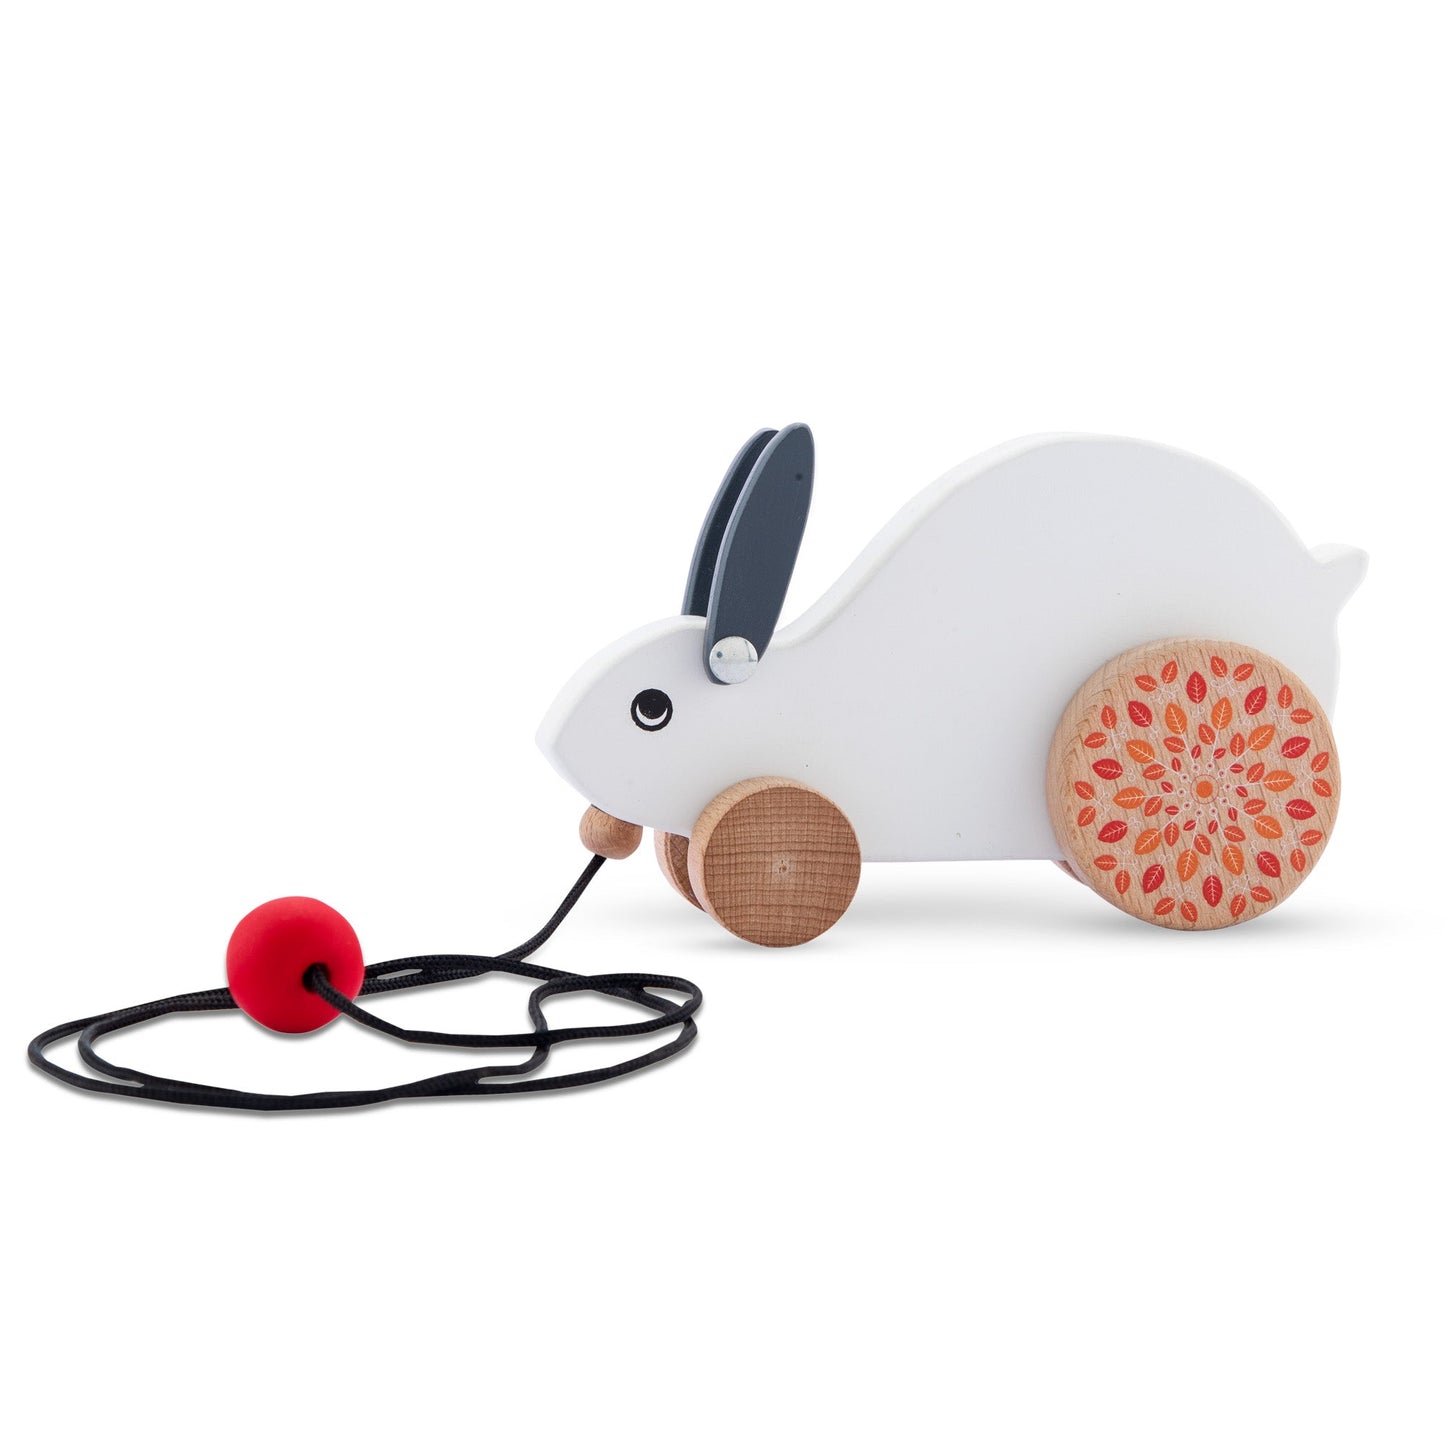 Buy Wooden Rabbit Pull Along Toy for Kids - SkilloToys